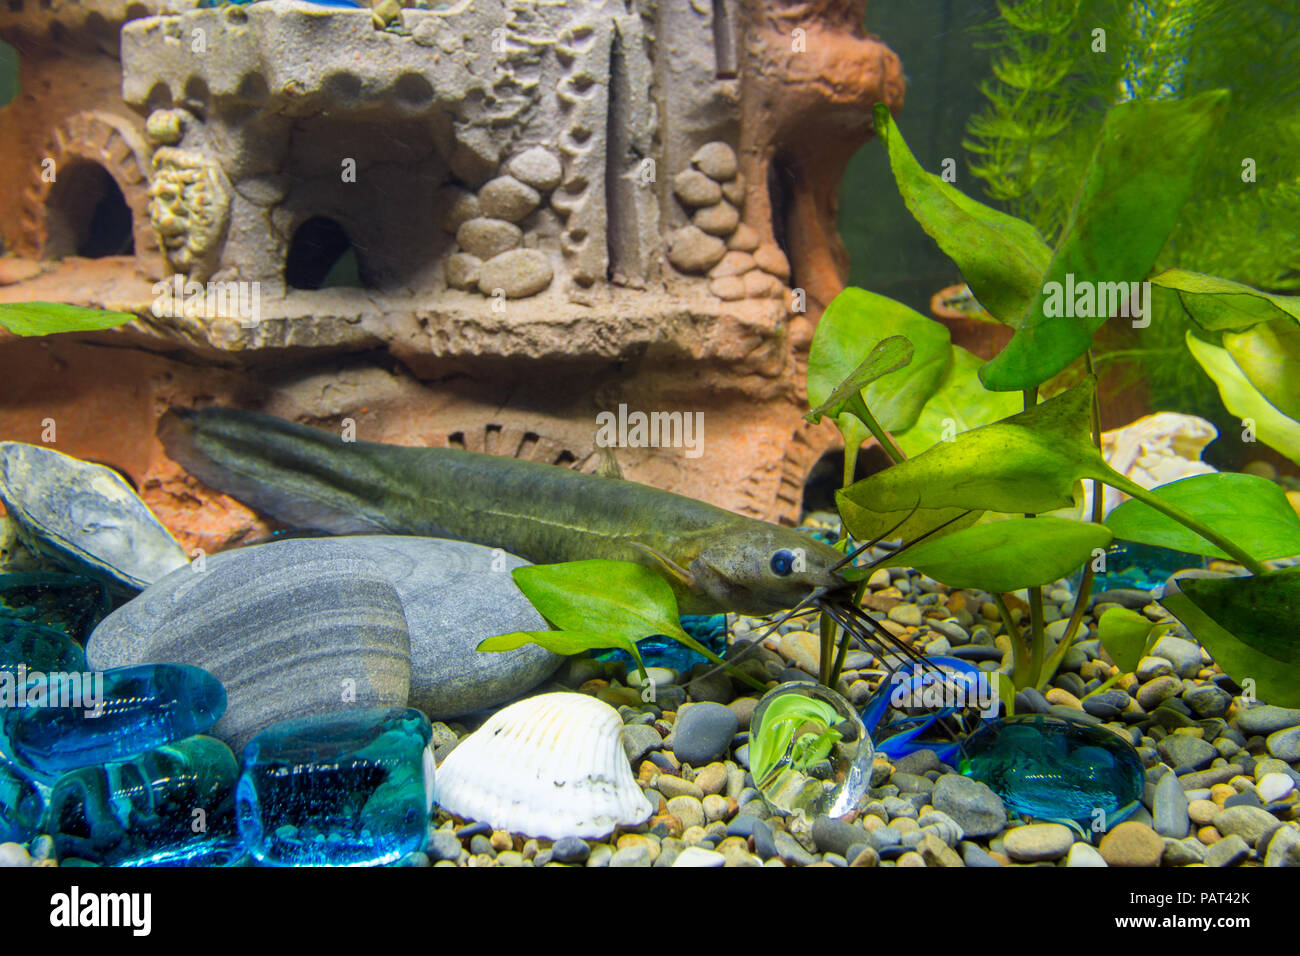 Sludge flies among shelters in a freshwater aquarium Stock Photo